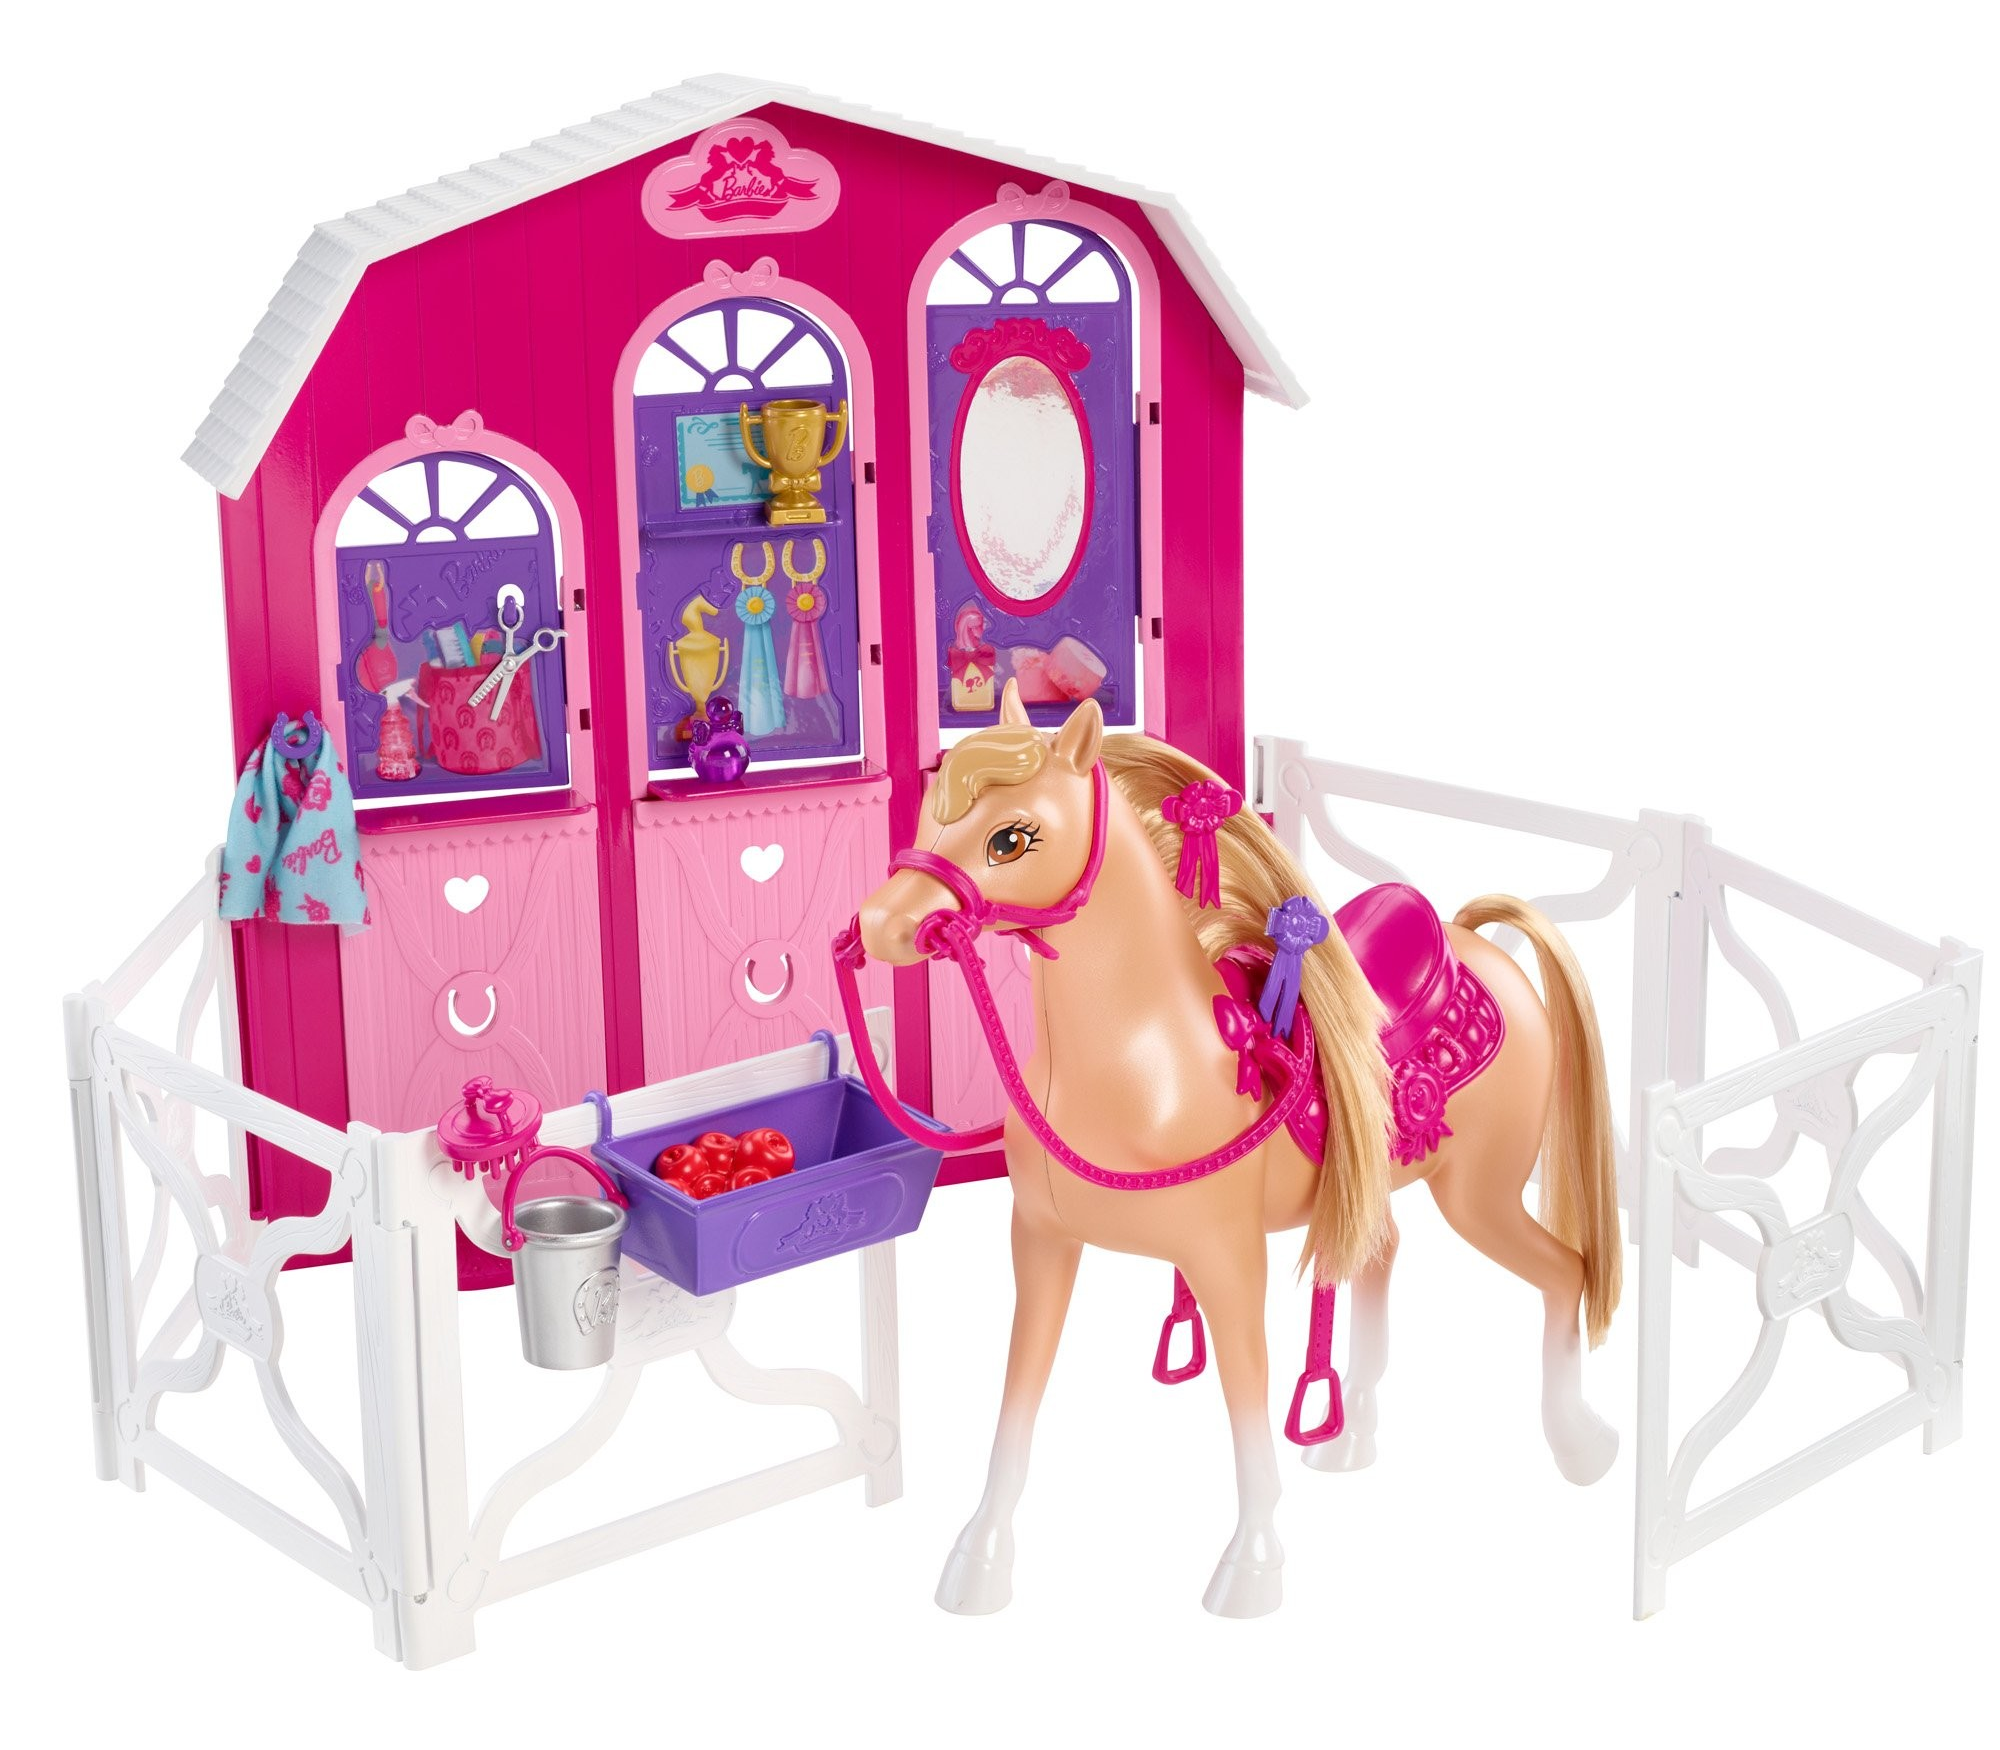 Барби набор конюшня. Барби с лошадками конюшня. Конюшня для кукол Барби. Барби с лошадкой поняшкой и конюшней. Конюшня пони